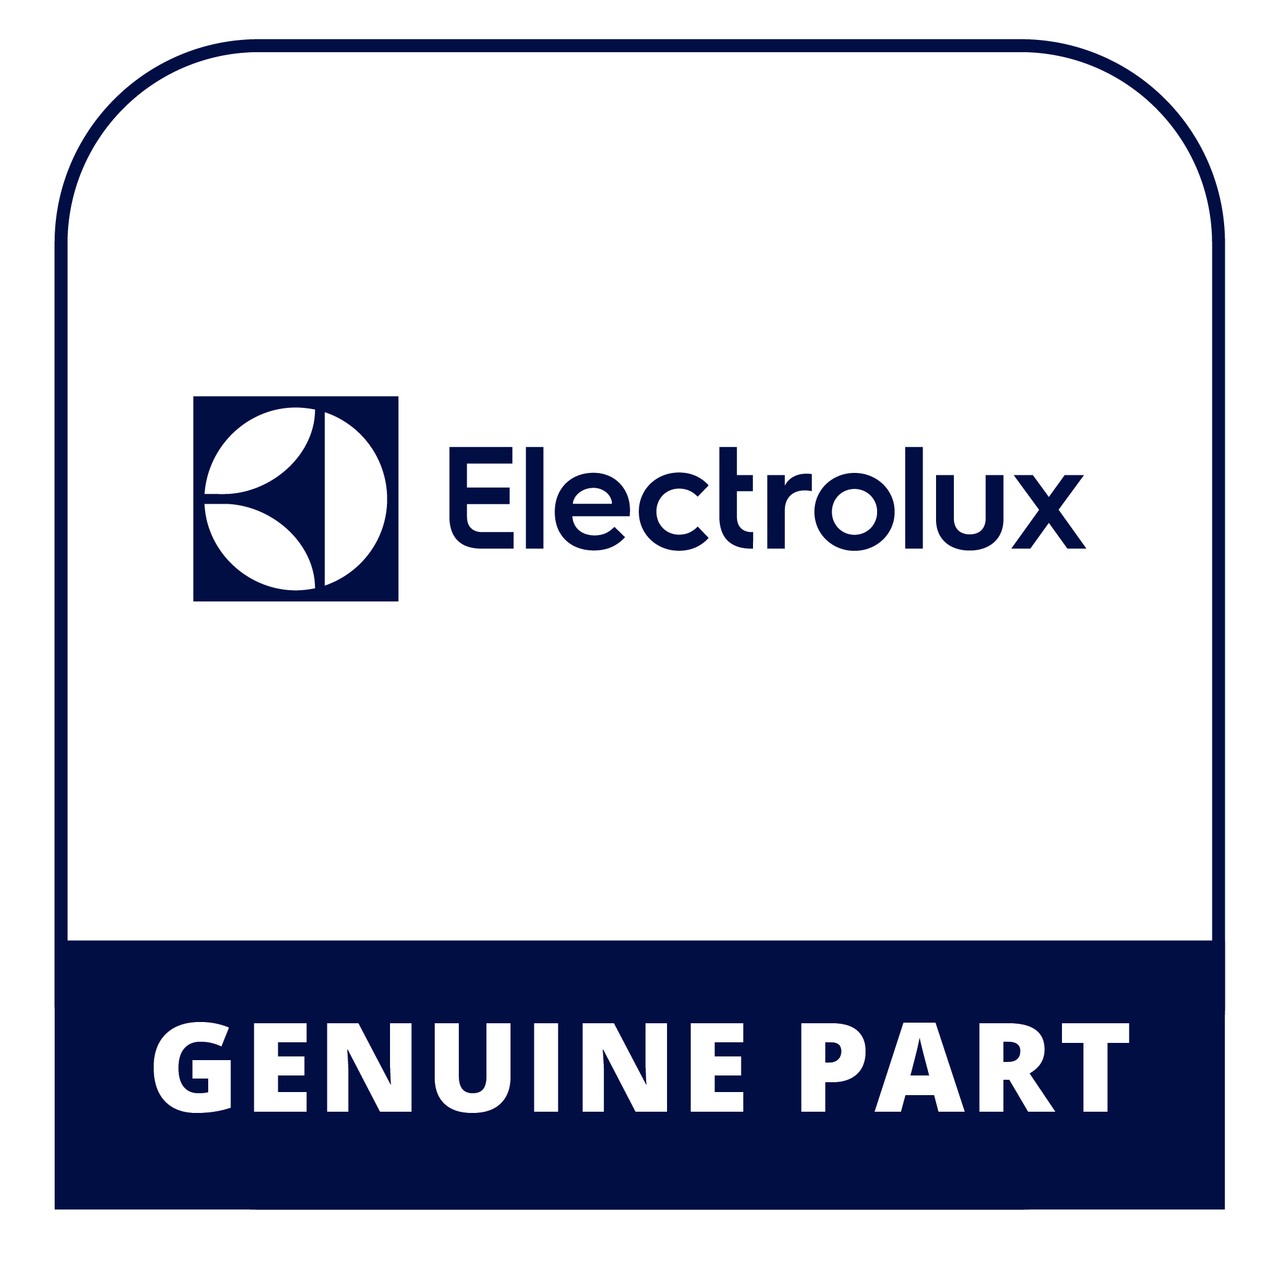 Frigidaire - Electrolux 316442120 - Board - Genuine Electrolux Part